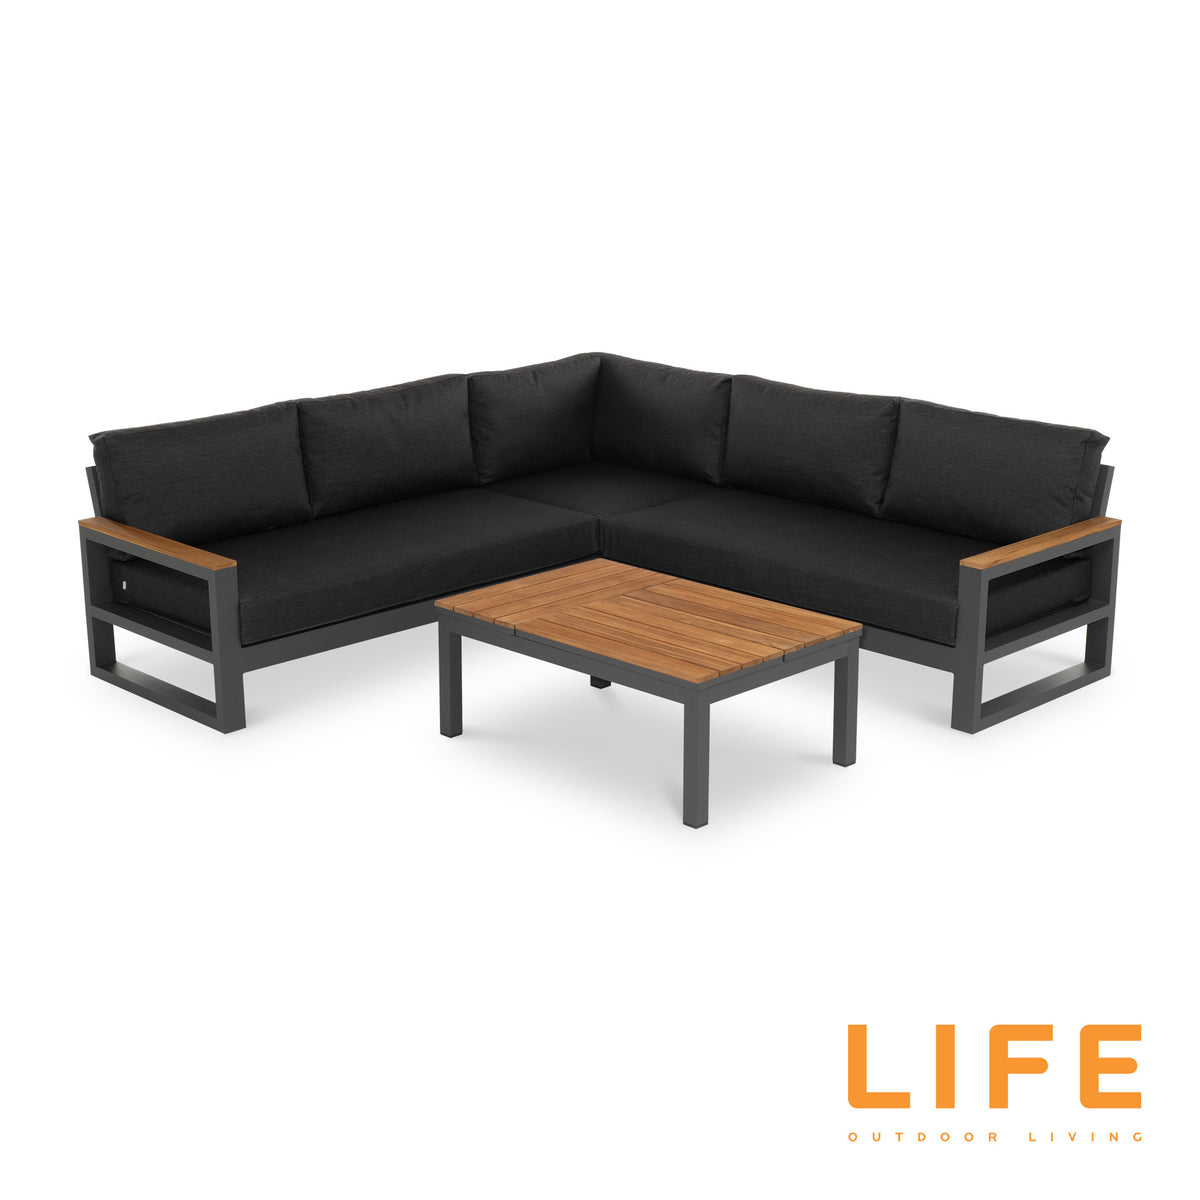 LIFE Soho Corner Lounge with Teak Lift Coffee Table